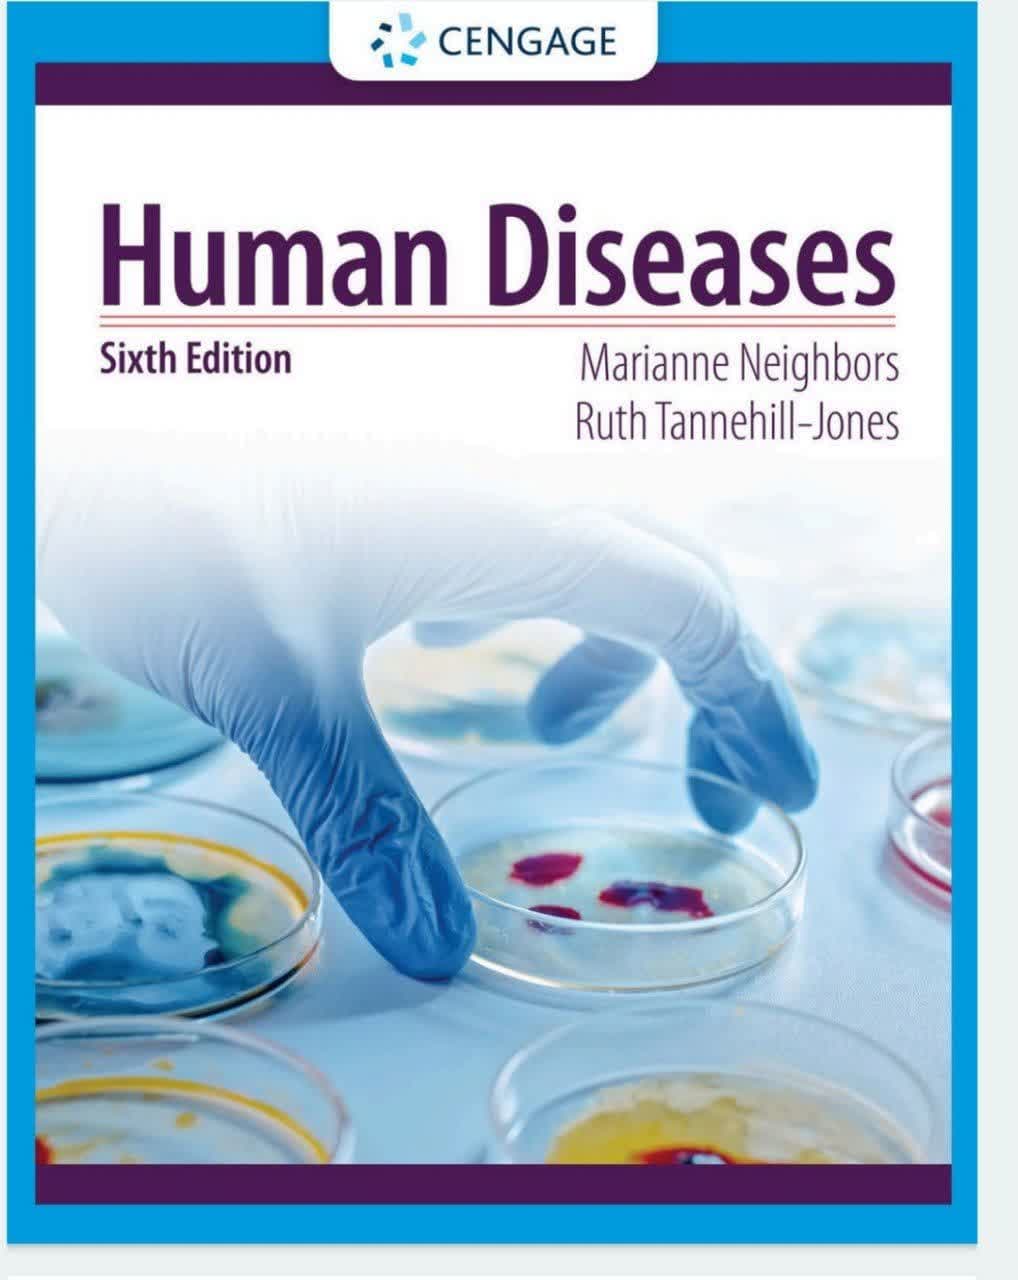 Human Diseases 6th edition - بیماری های انسان اثر ویرایش ششم